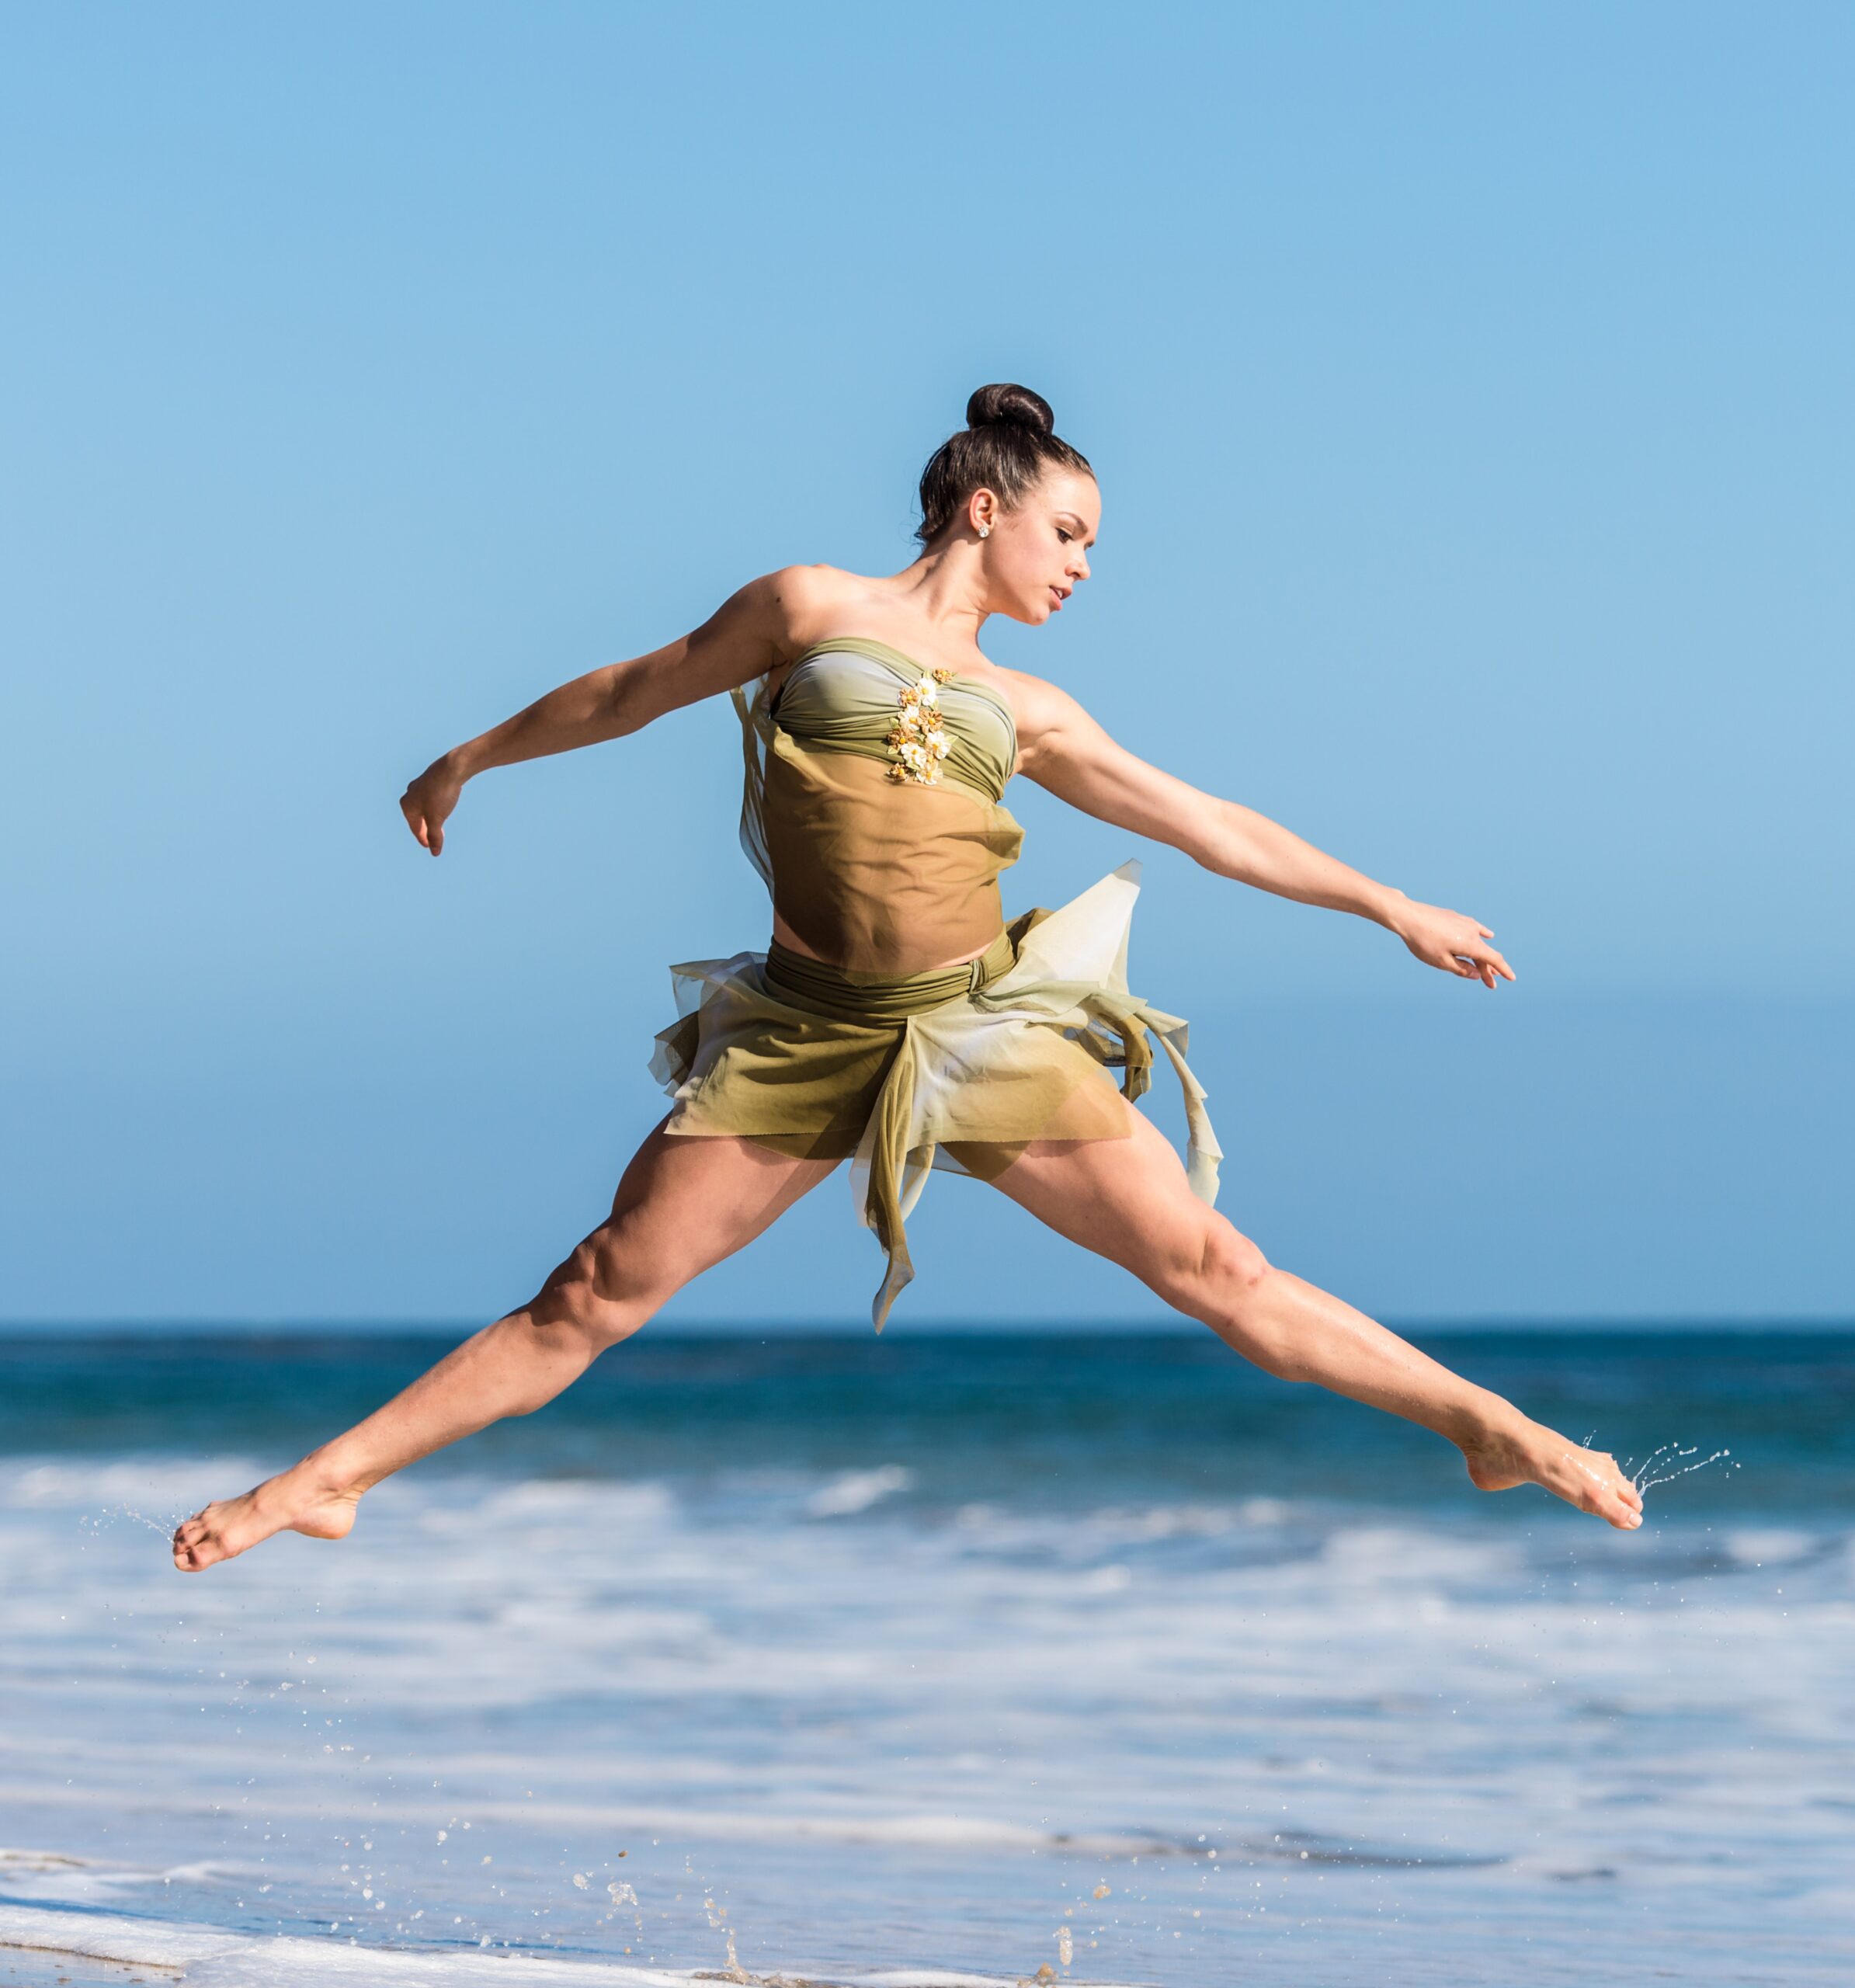 belly dancer jumping in front of ocean